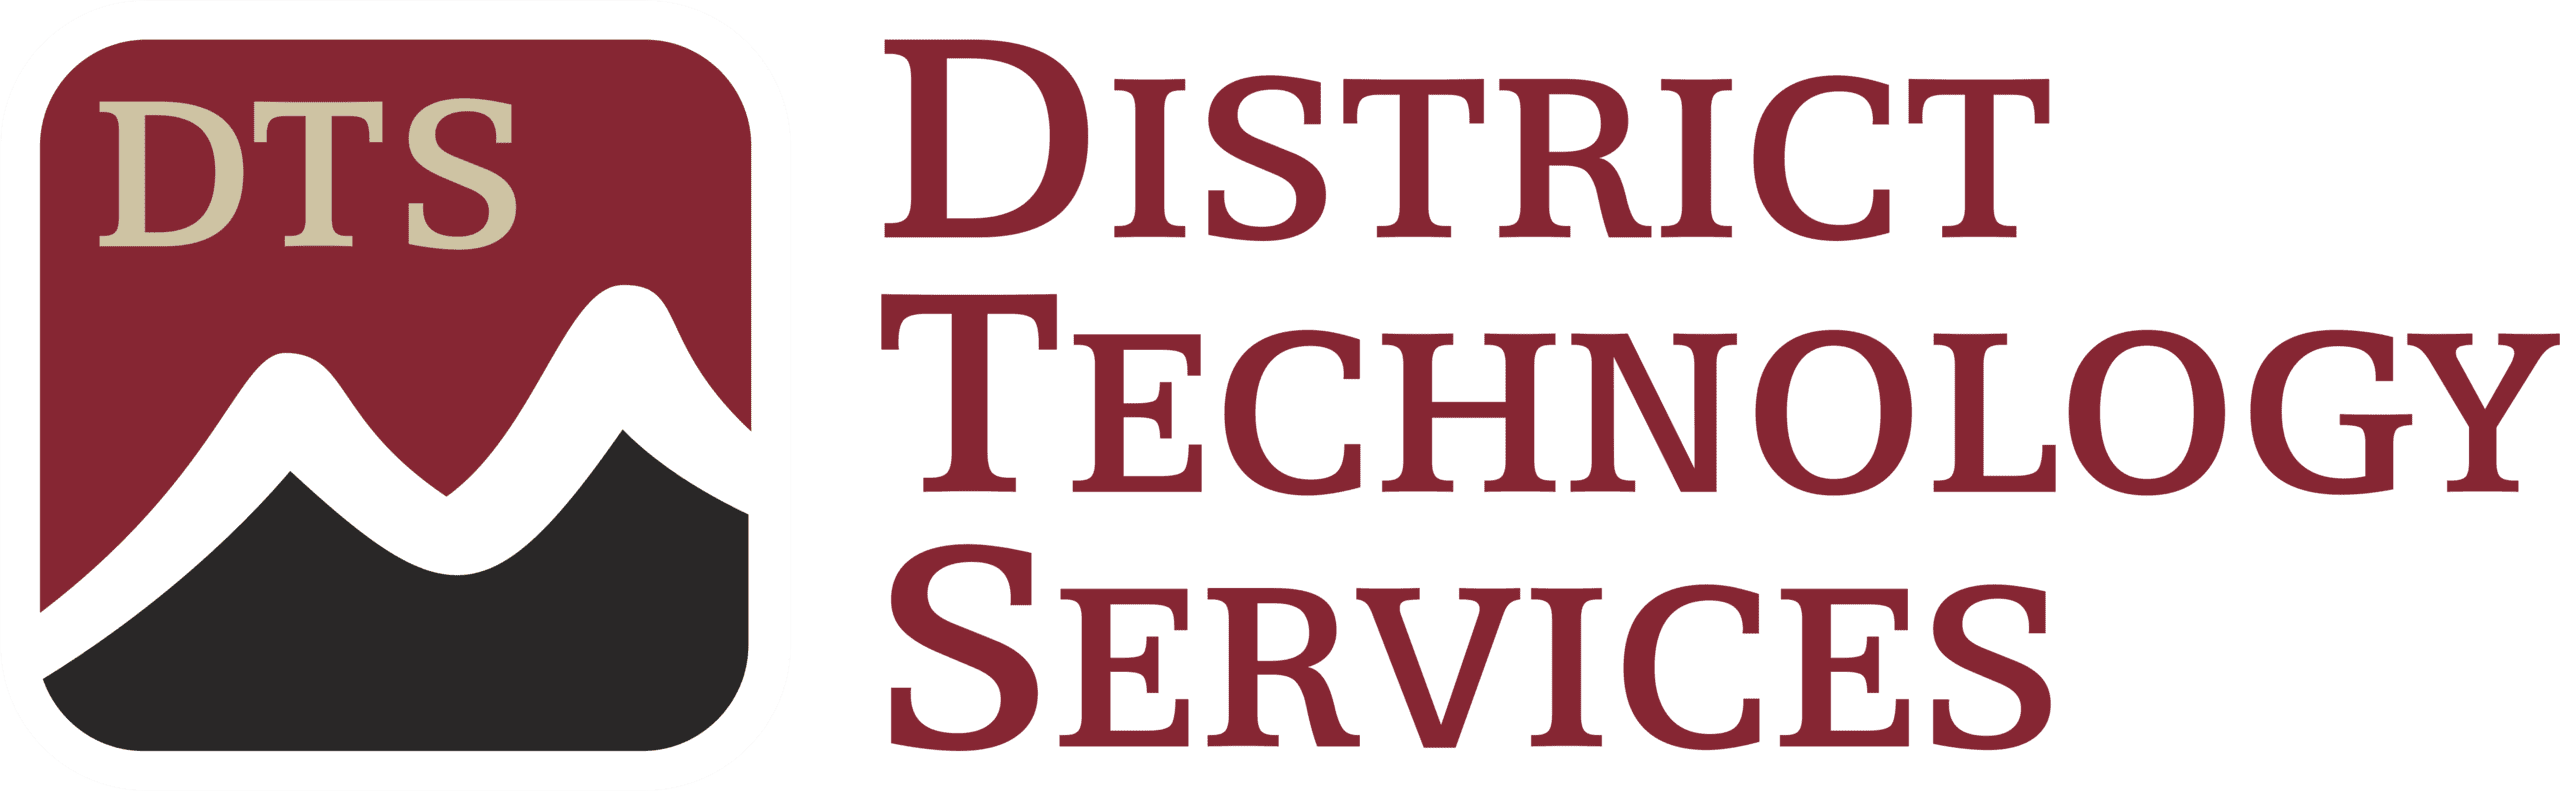 DTS HD Logo Download png